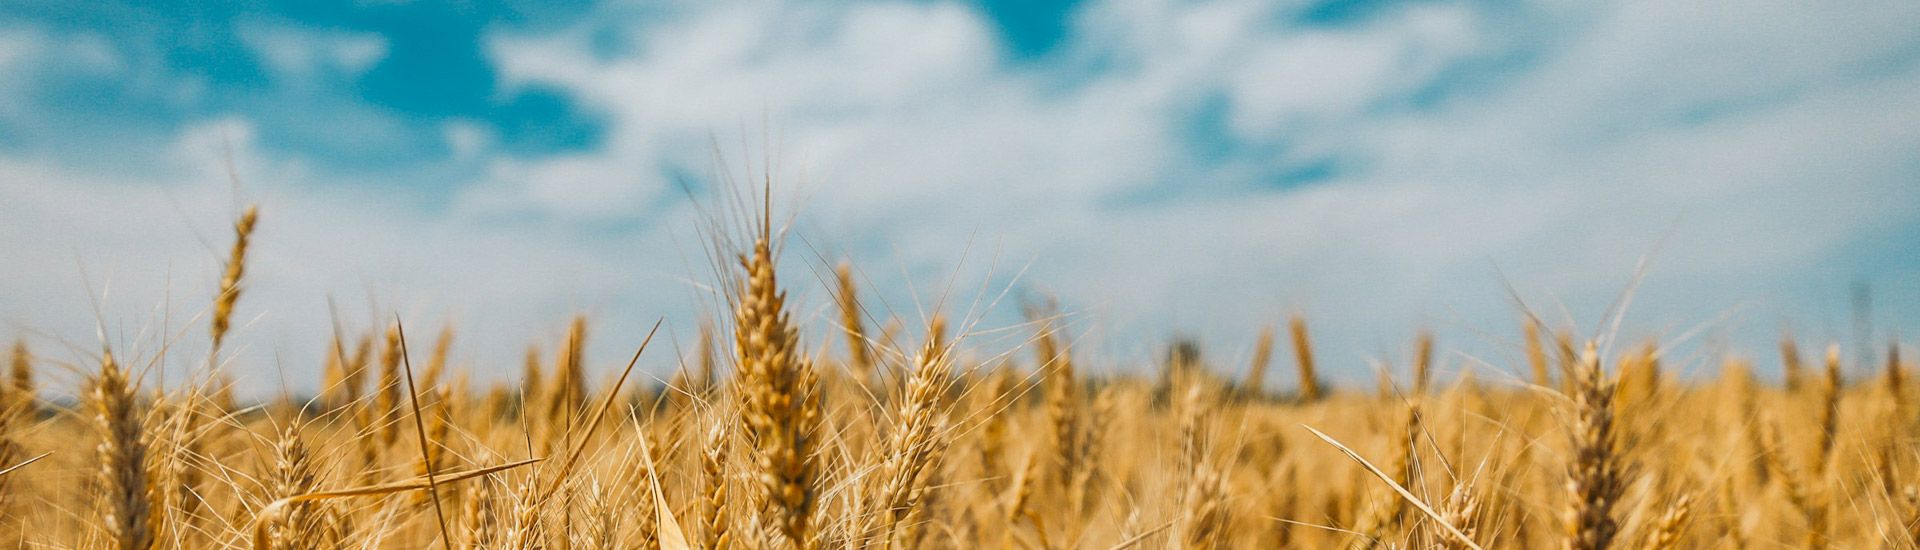 Wheat under a bright blue sky